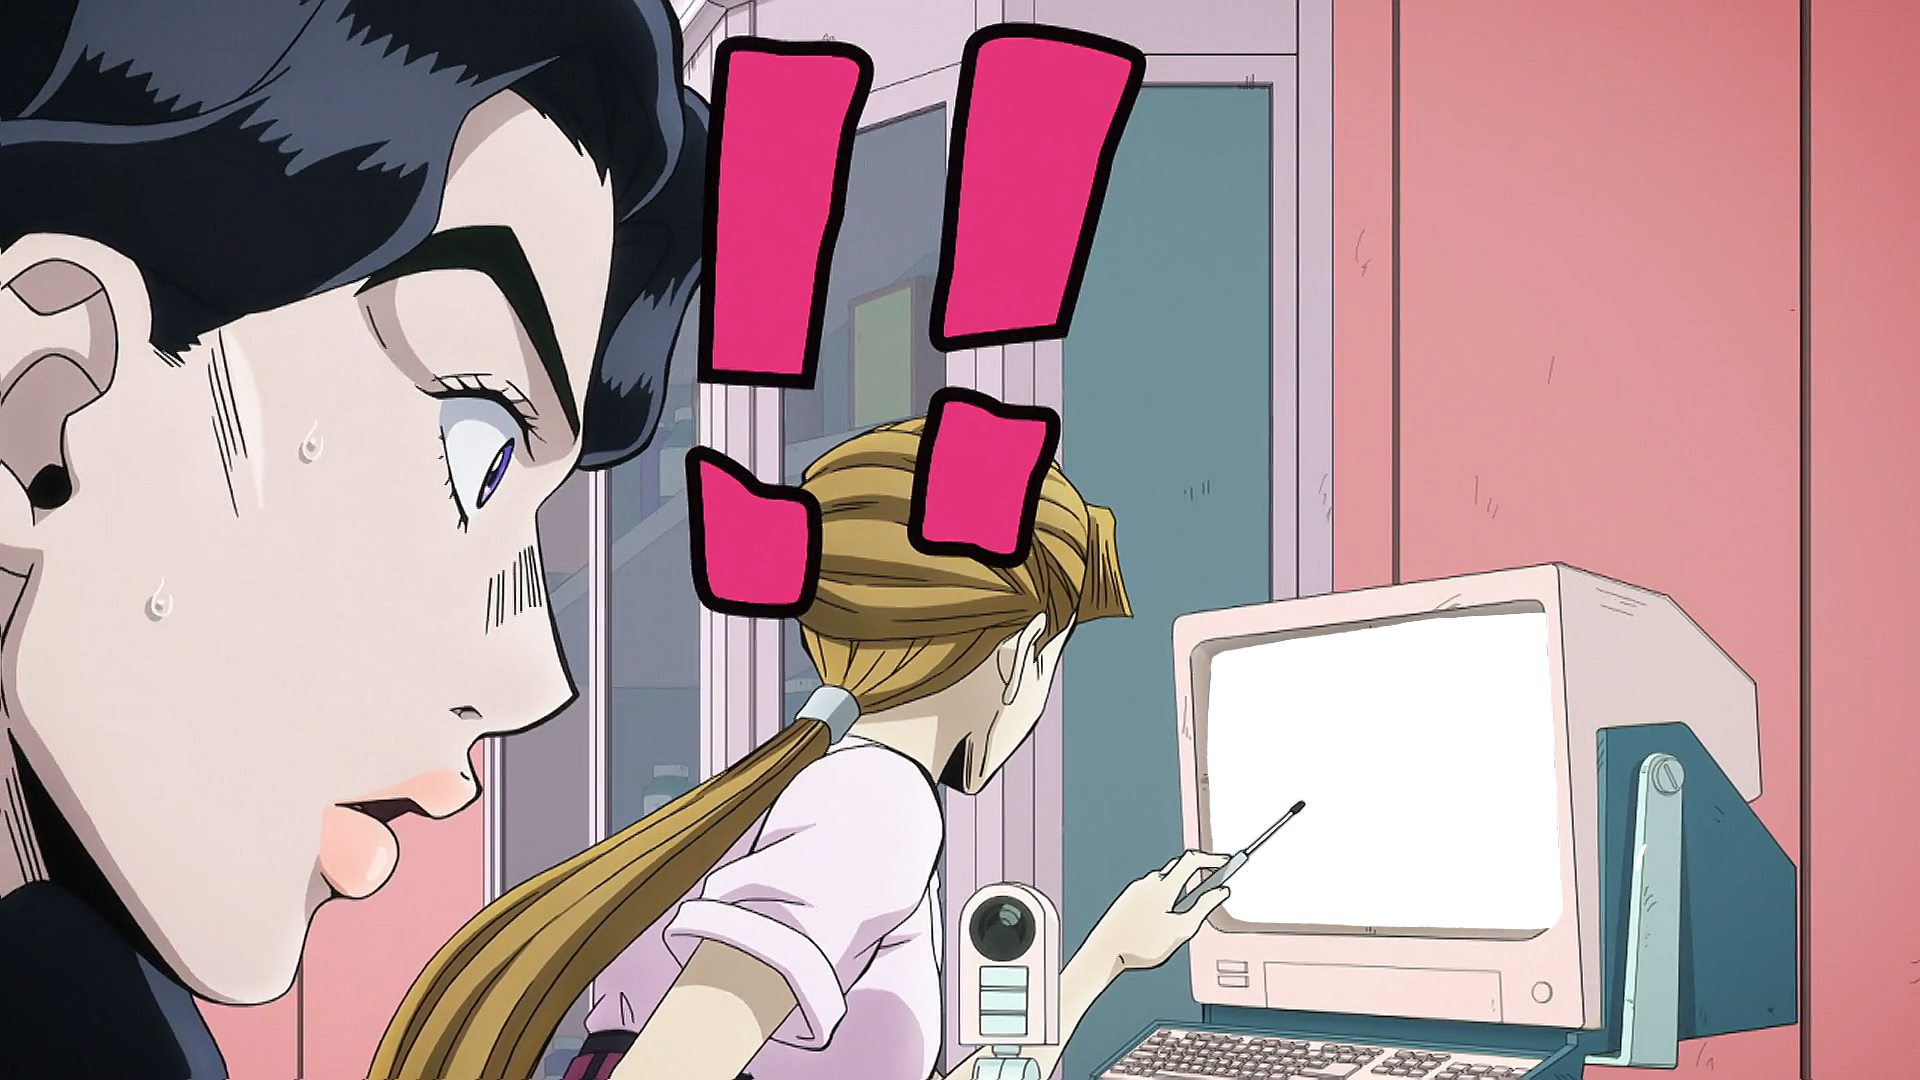 Yukako is shocked by the PC. JoJo's Bizarre Adventure